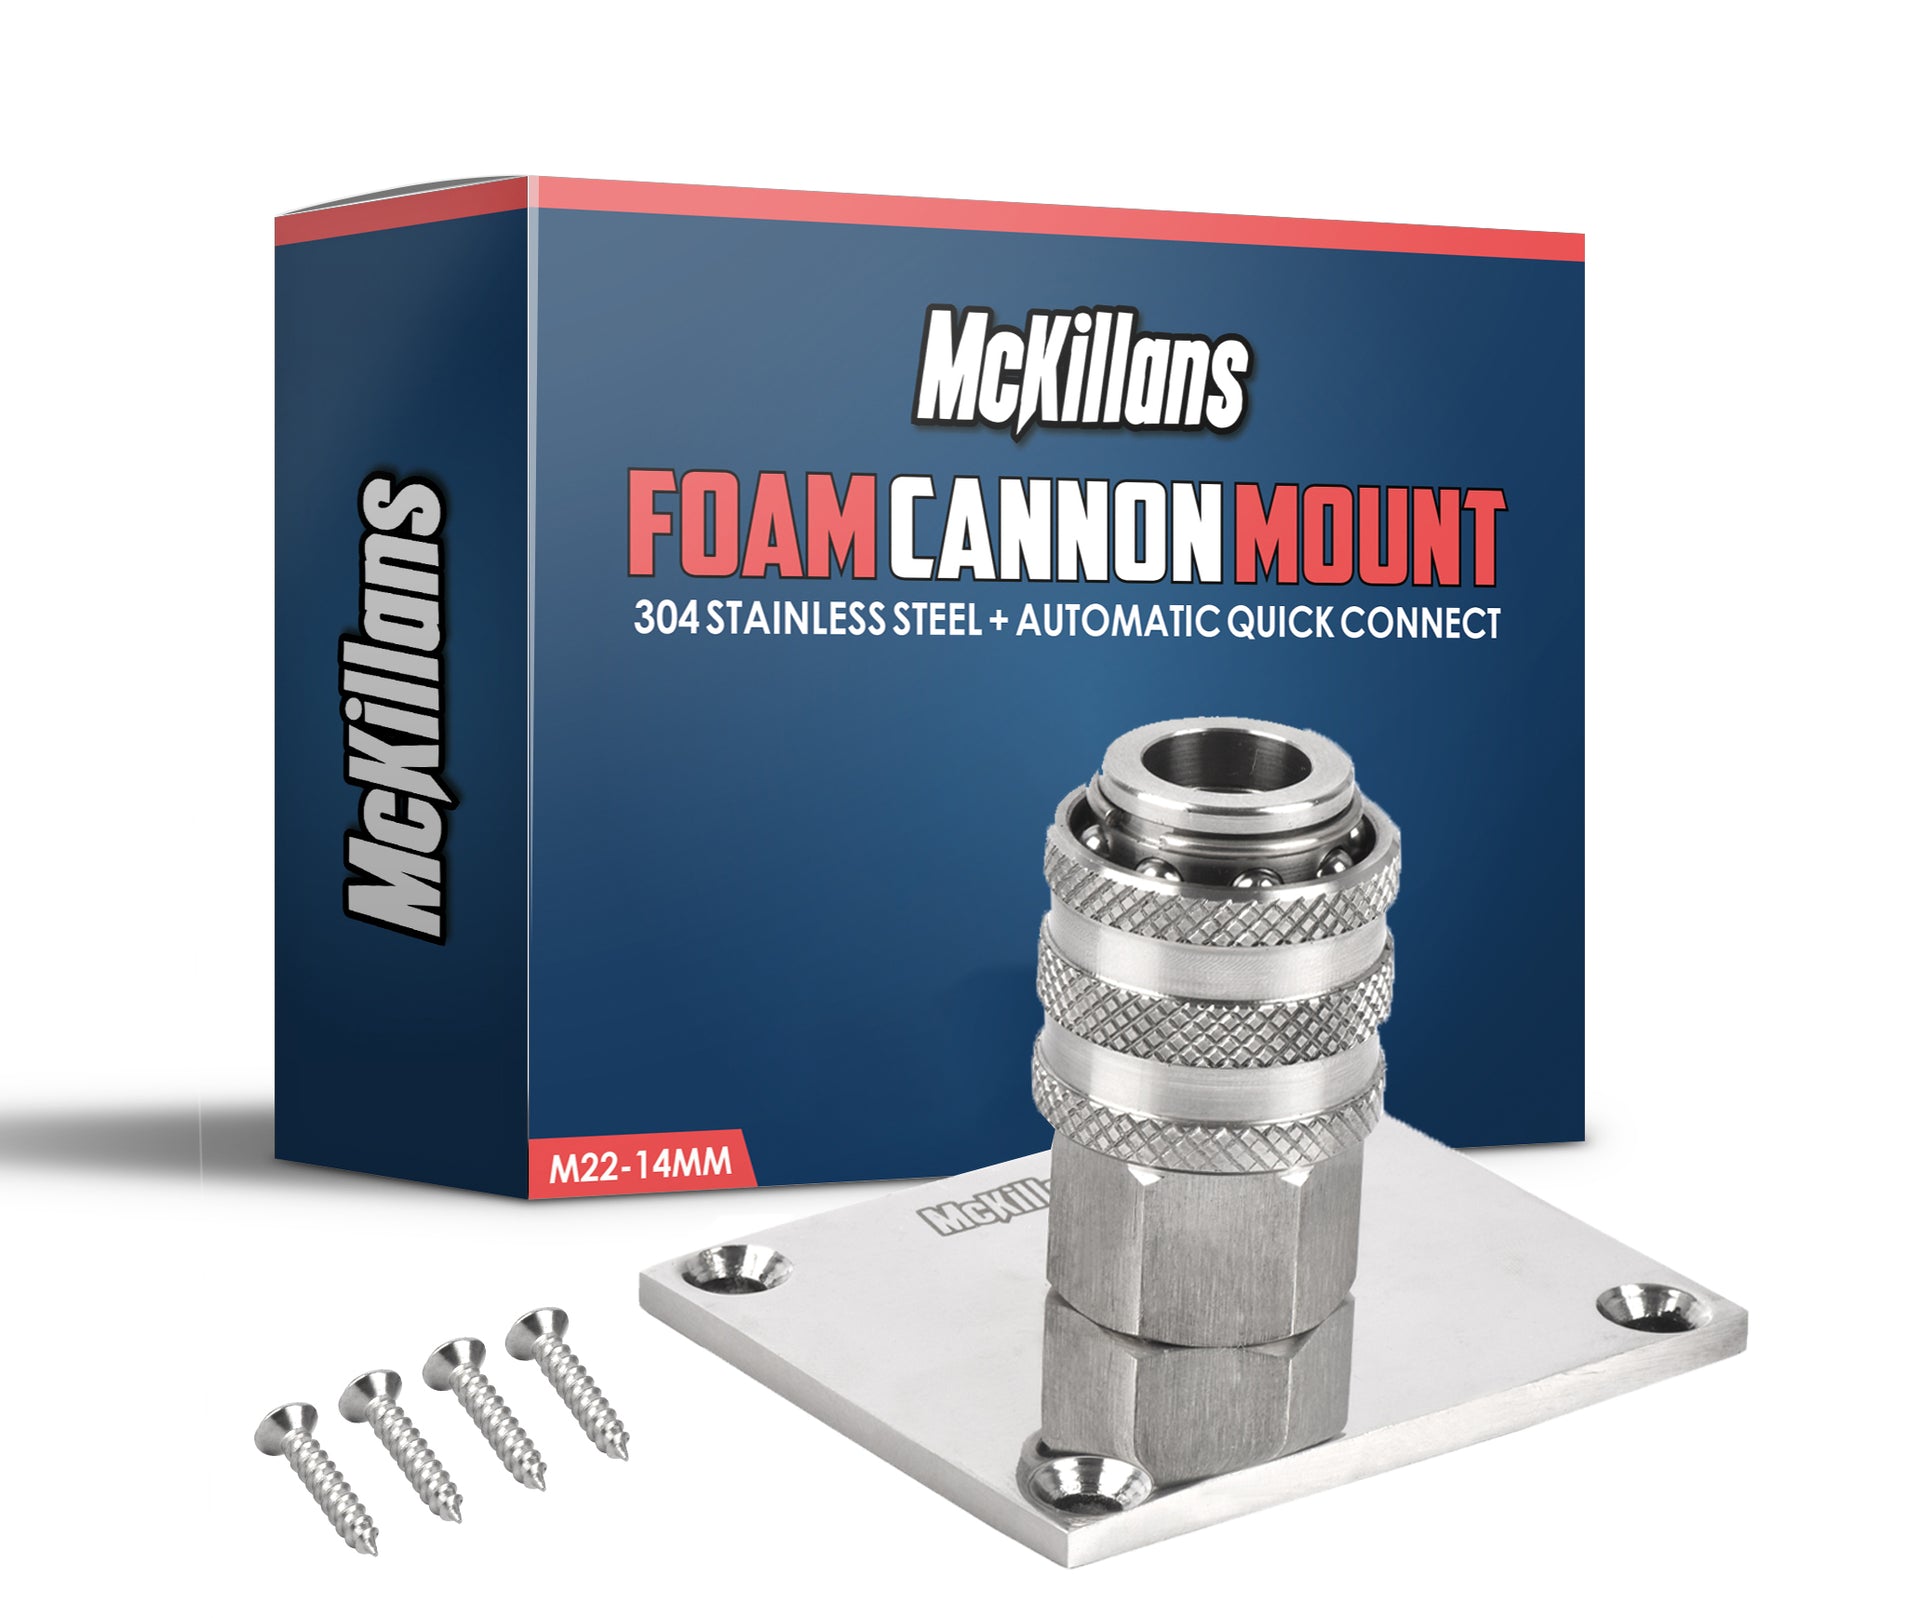 Mild Steel Foam Canon, Automation Grade: Automatic, 3000w